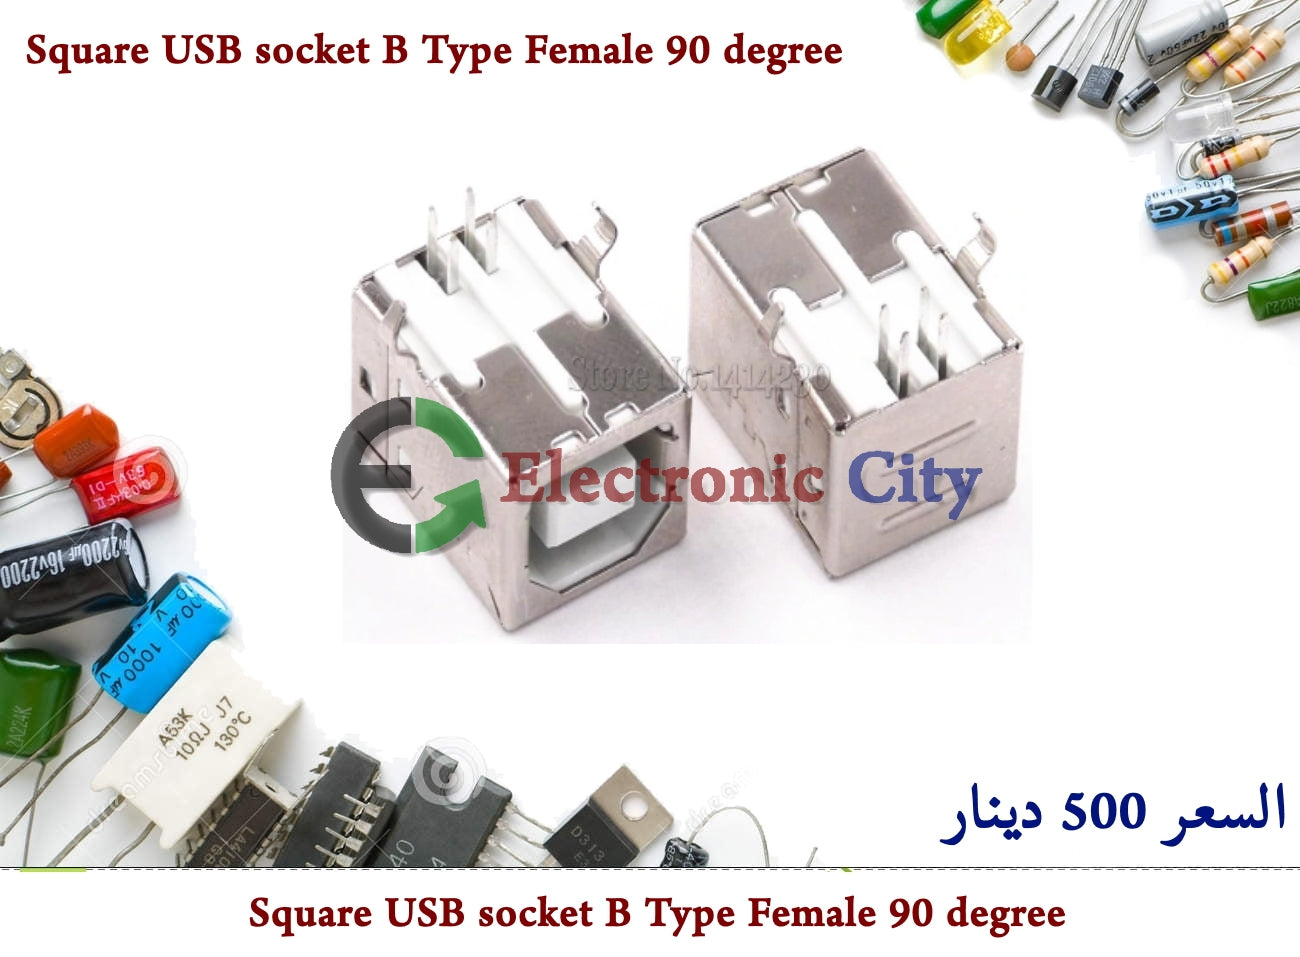 Square USB socket B Type Female 90 degree